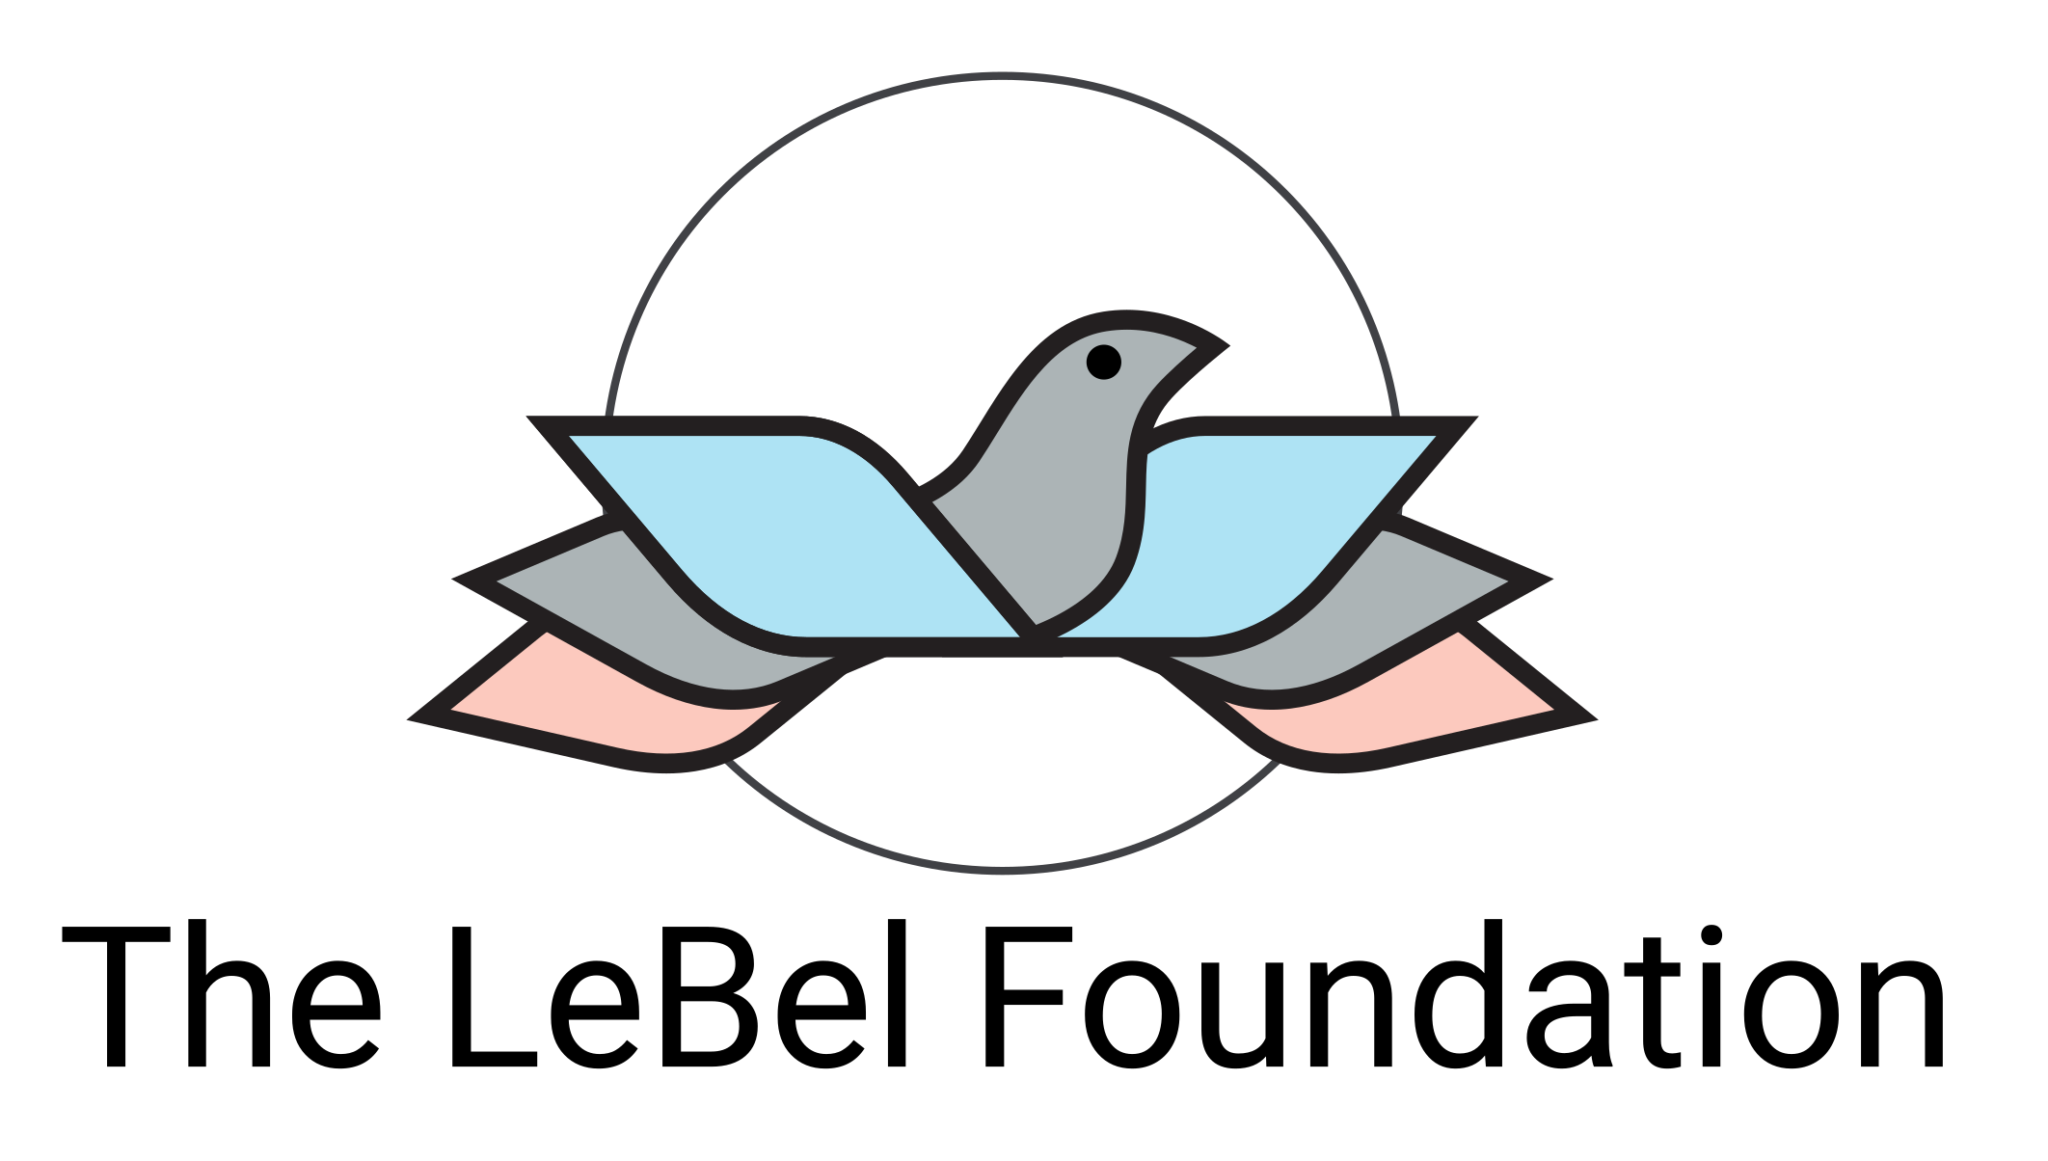 The LeBel Foundation